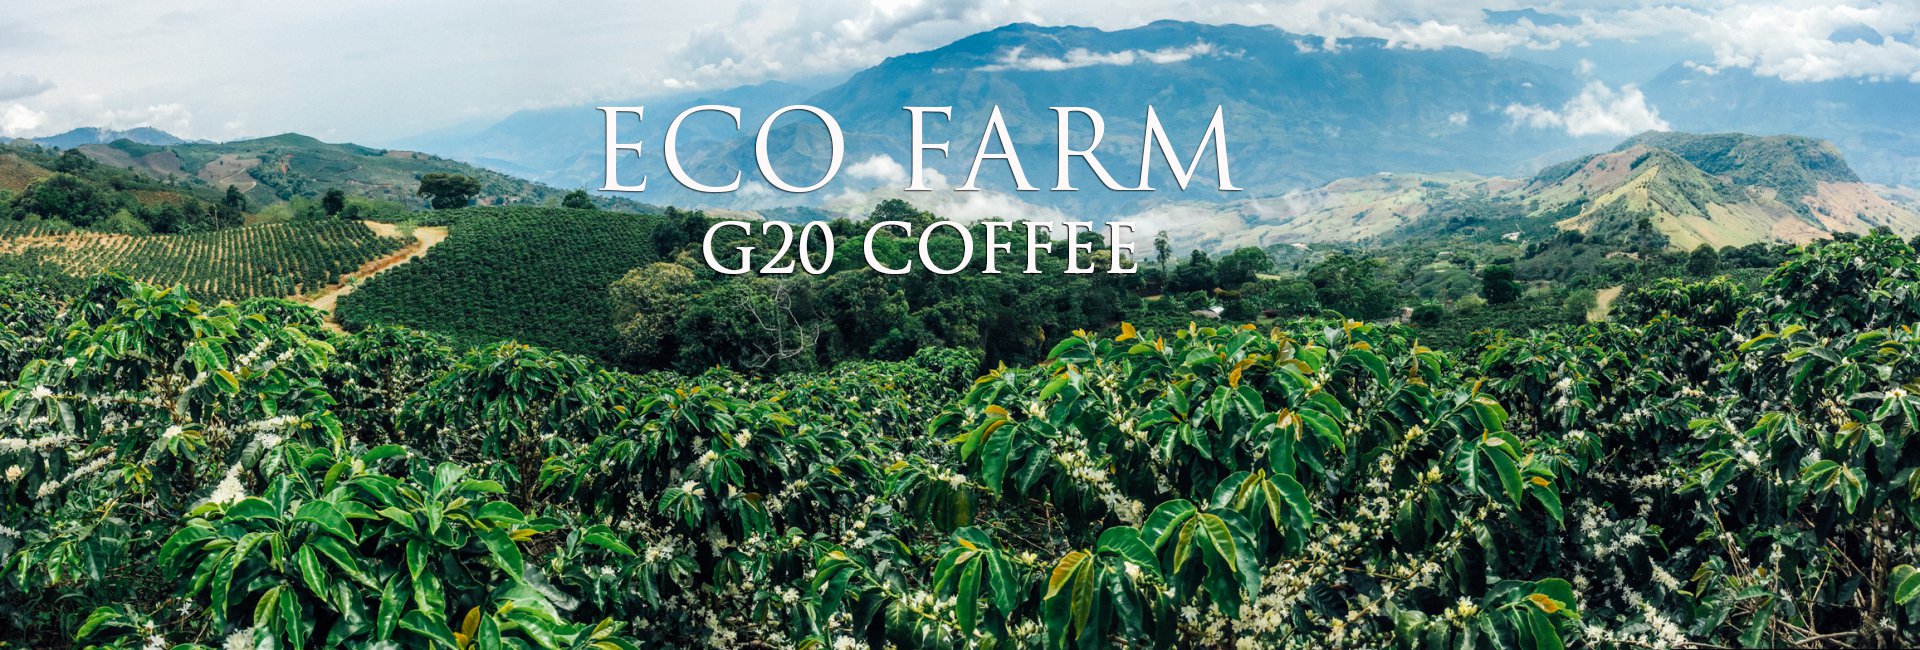 ECO FARM G20 COFFEE